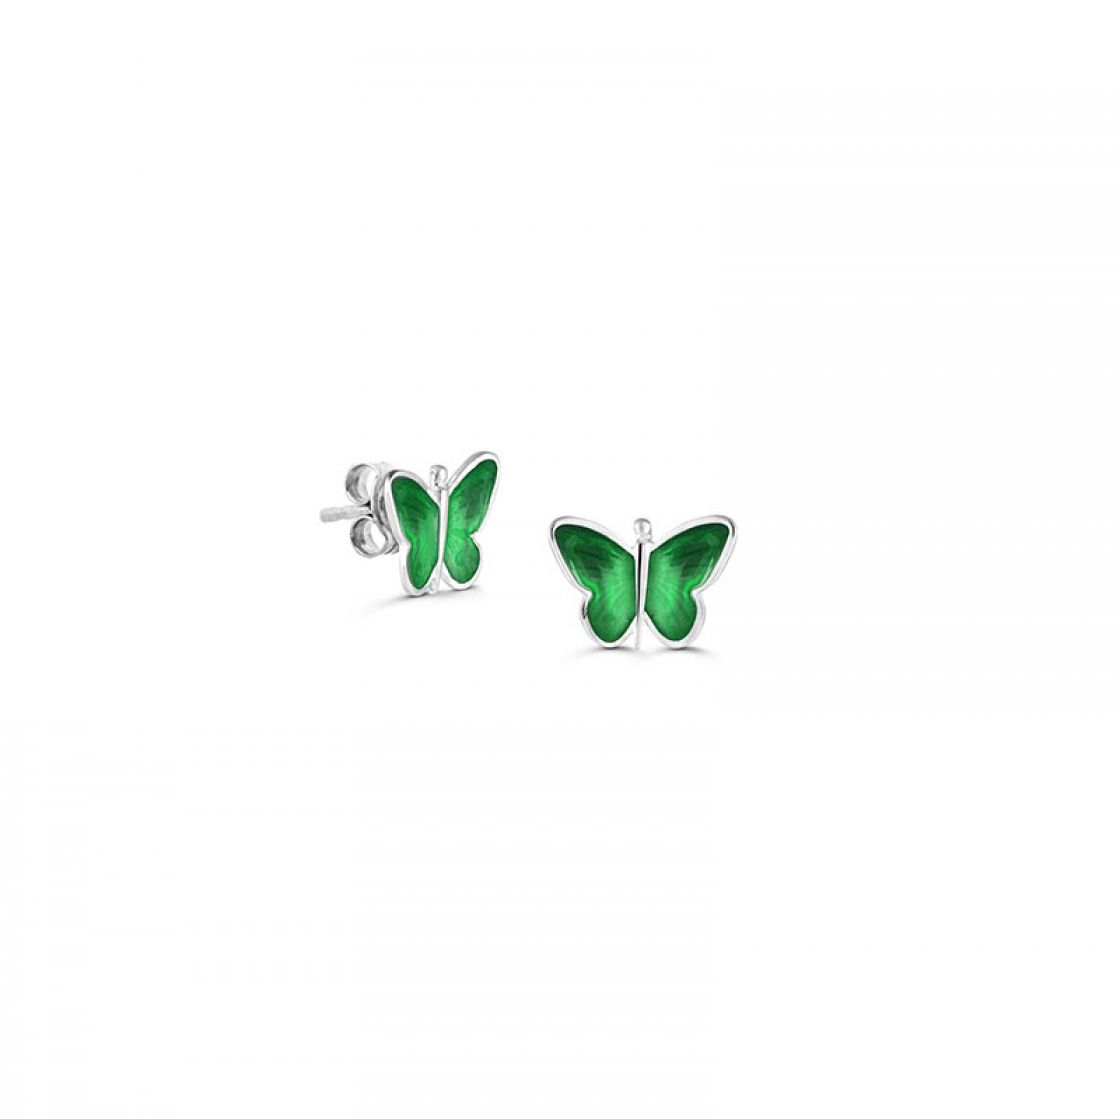 Tiny butterflies stud earrings, are beautifully handpainted in green enamel.